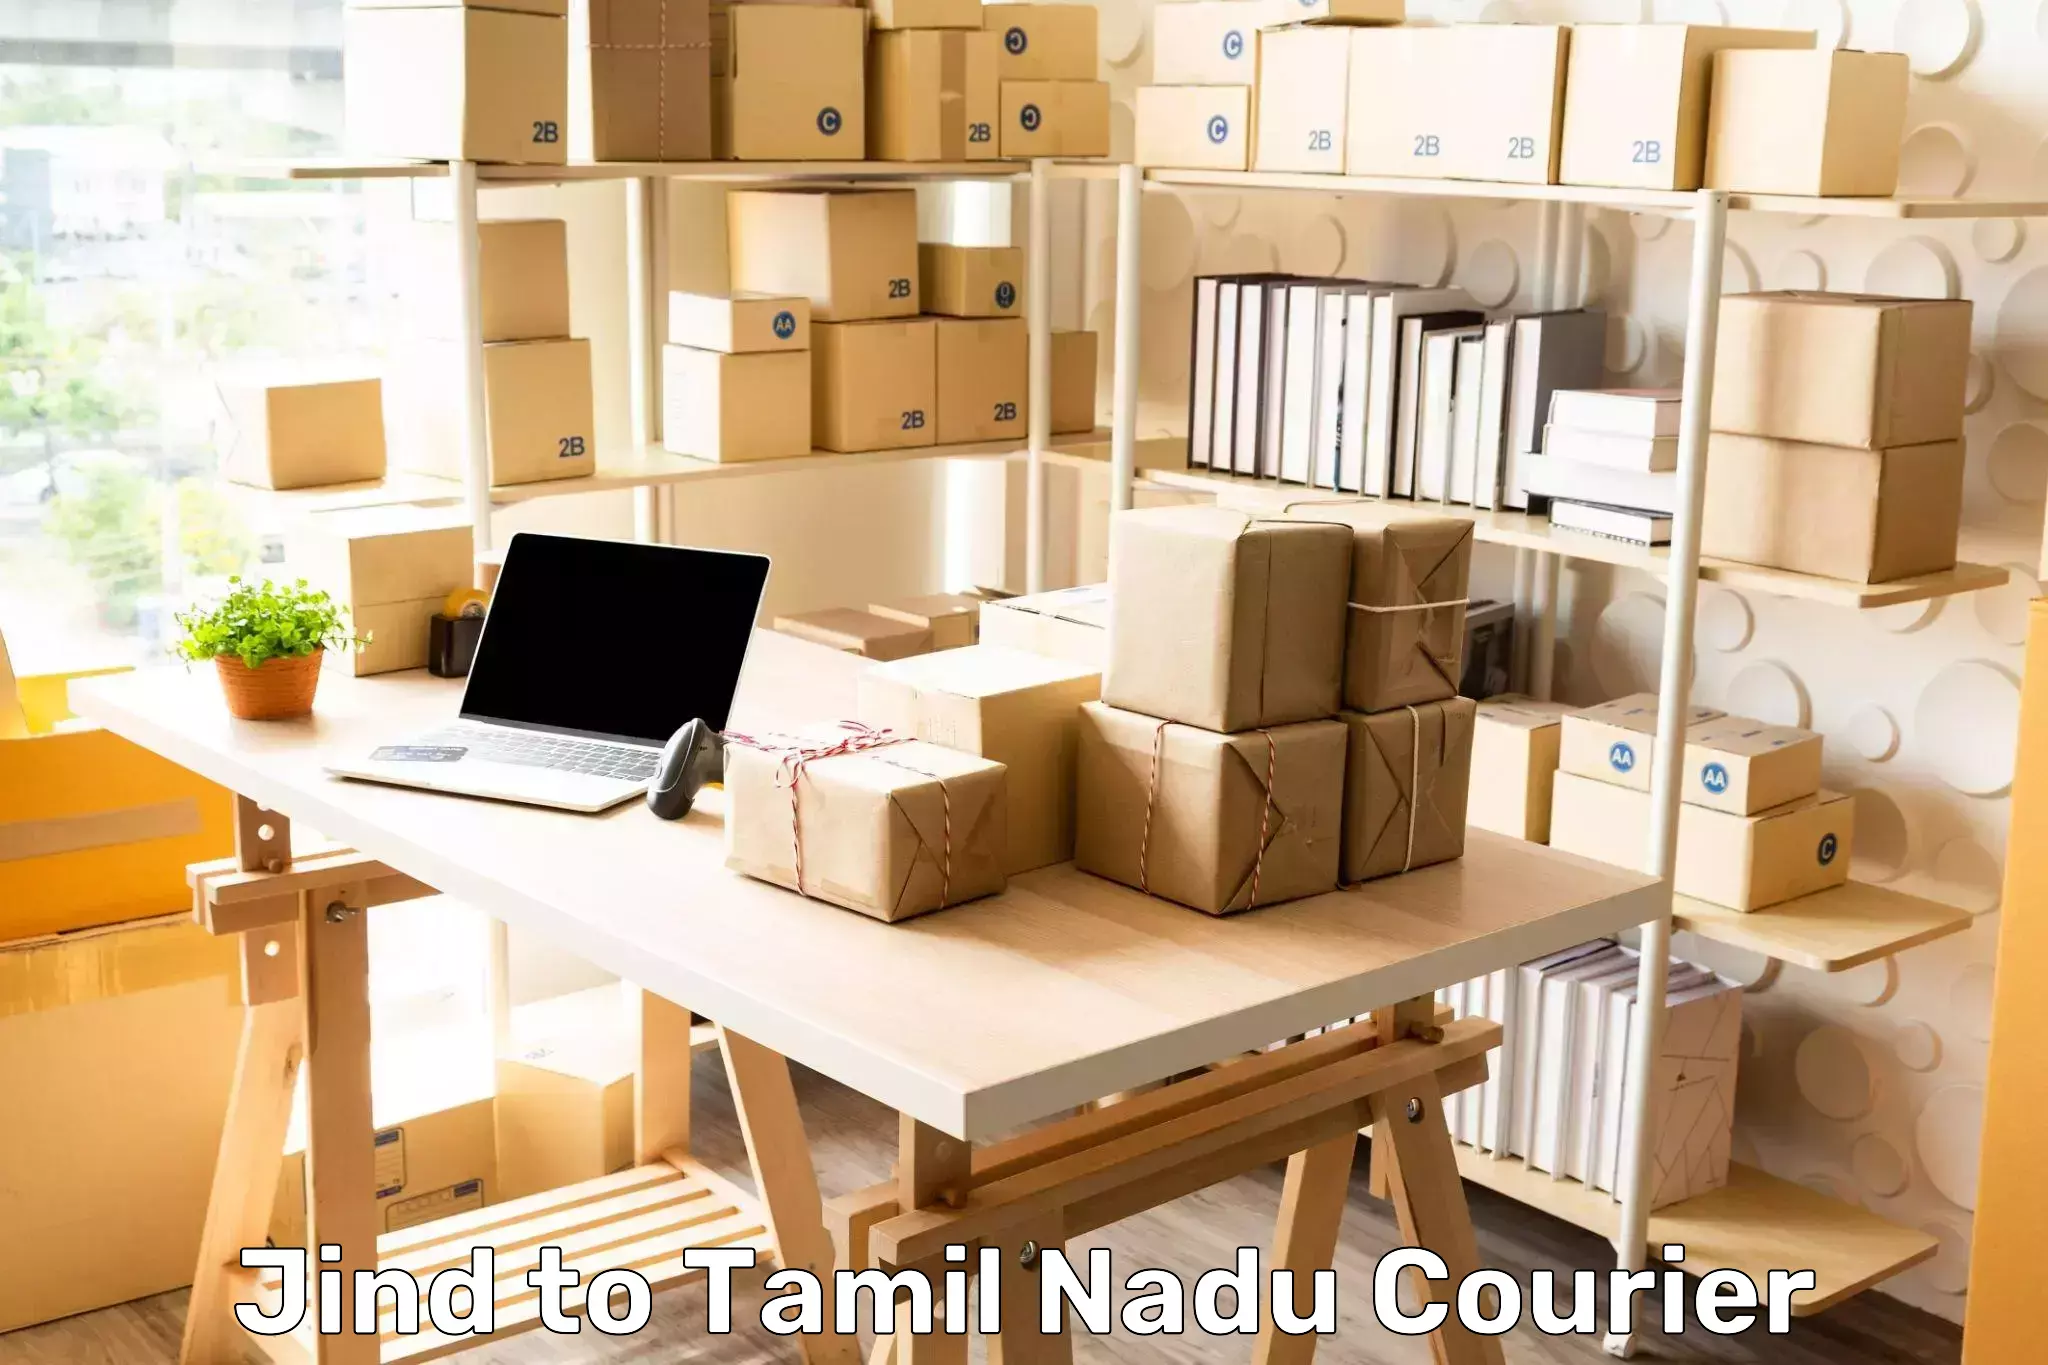 Global shipping solutions Jind to Tiruchirappalli